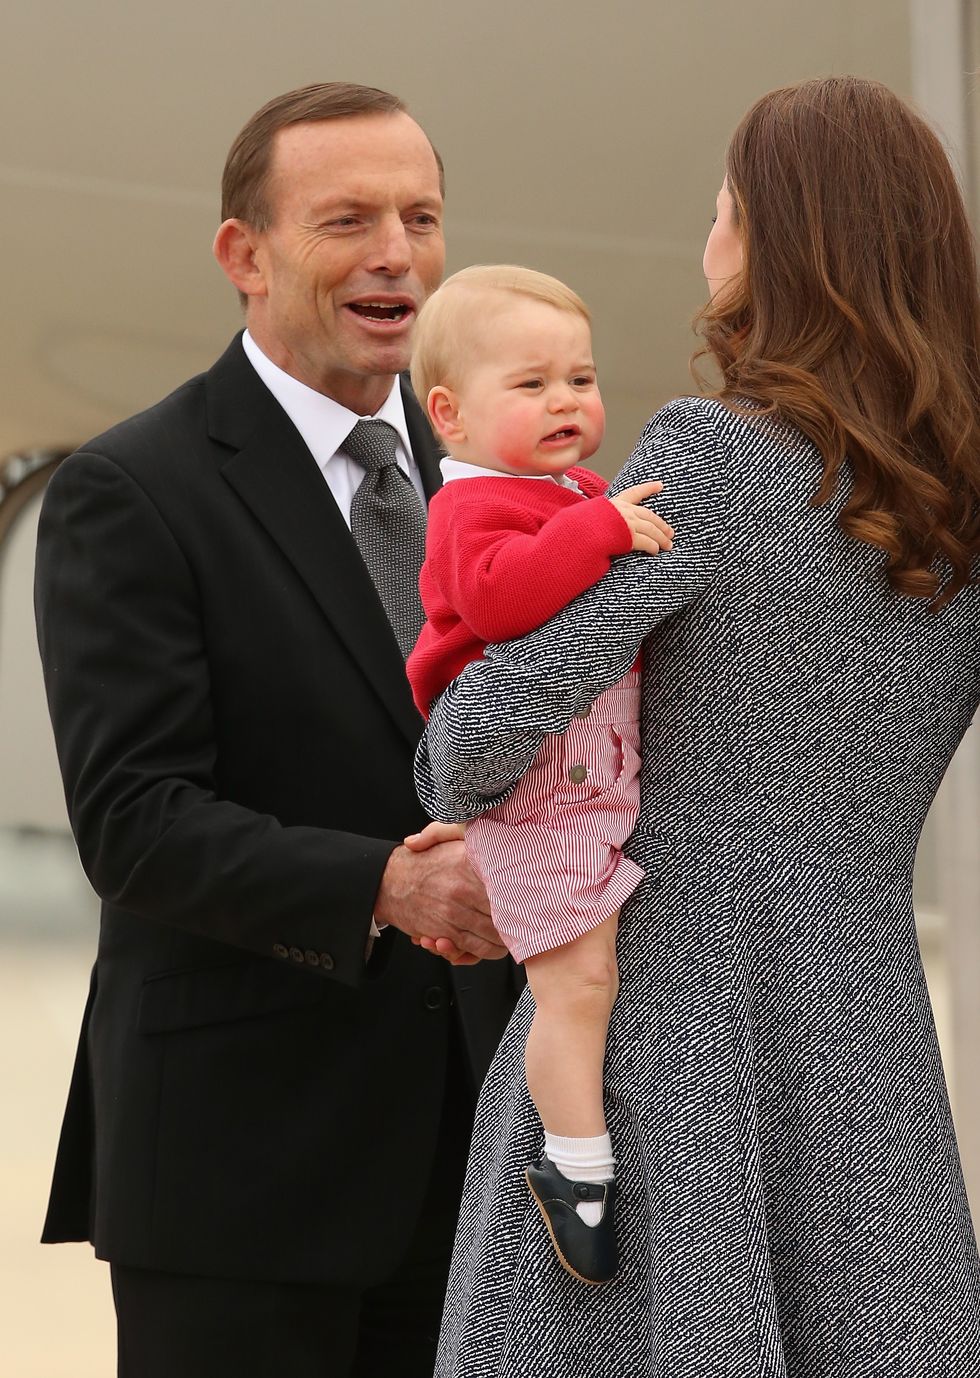 The Duke And Duchess Of Cambridge Tour Australia And New Zealand - Day 19